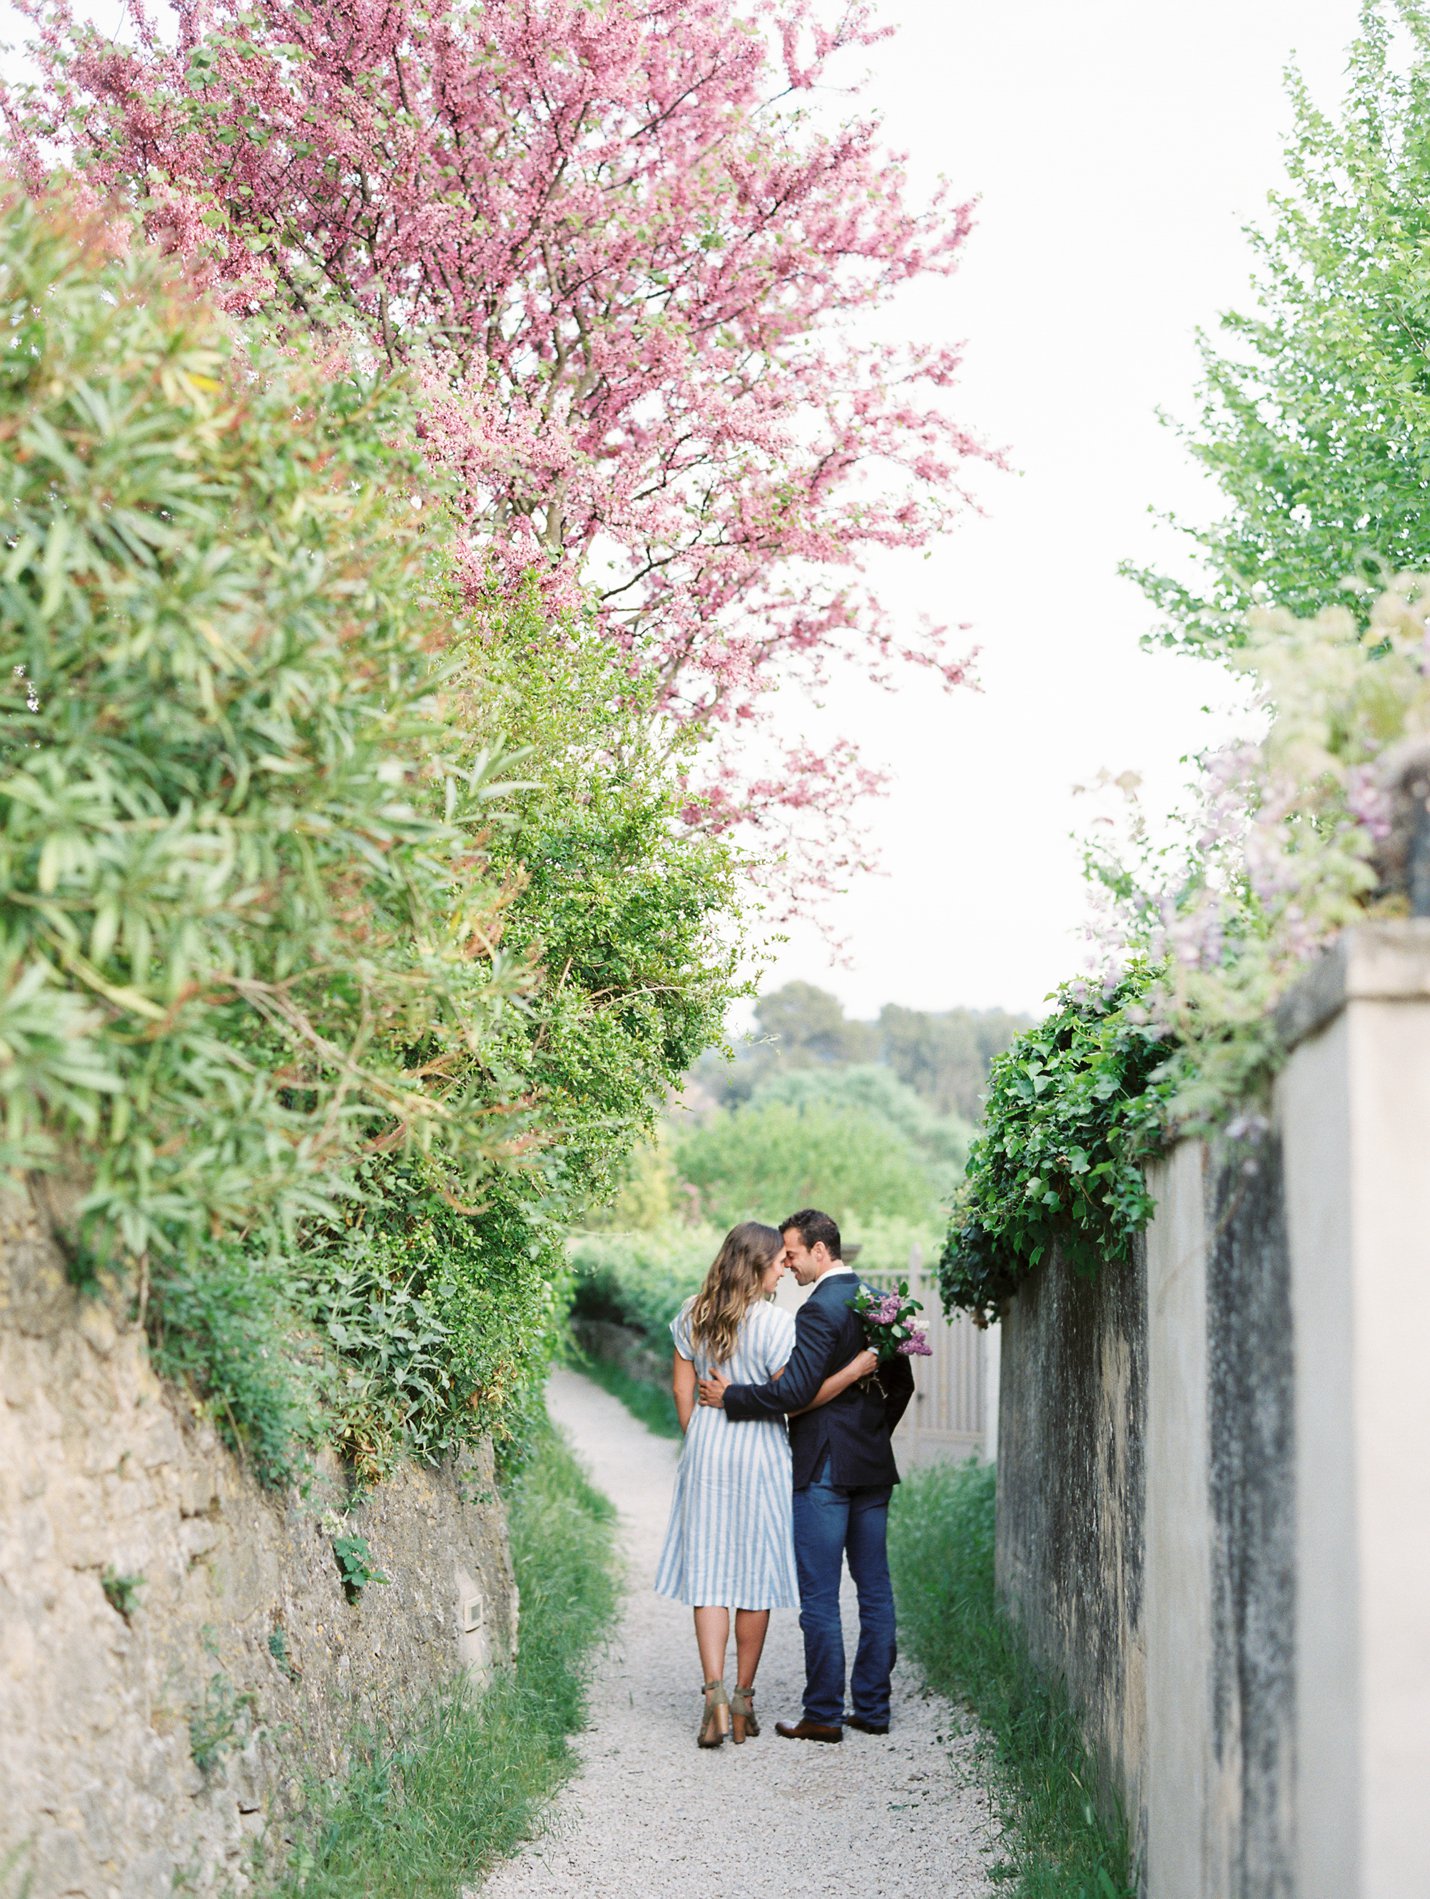 Provence France engagement photos - Rachel Solomon Photography